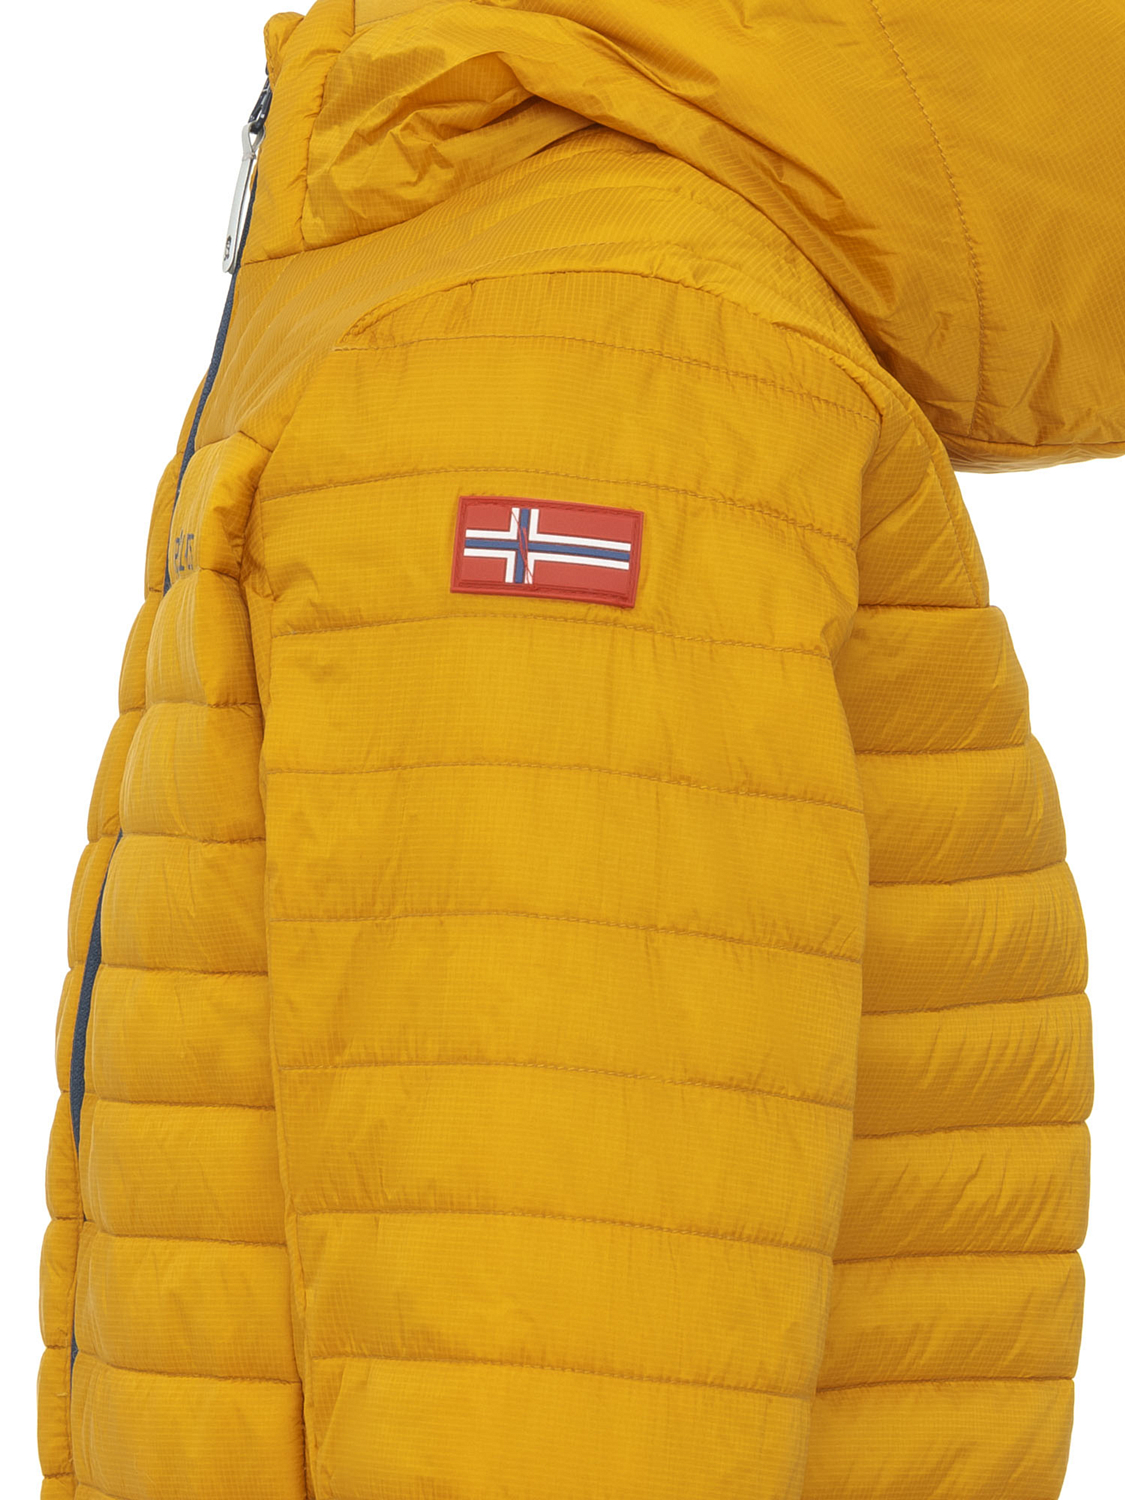 Куртка детская Trollkids Eikefjord Golden Yellow/Mystic Blue